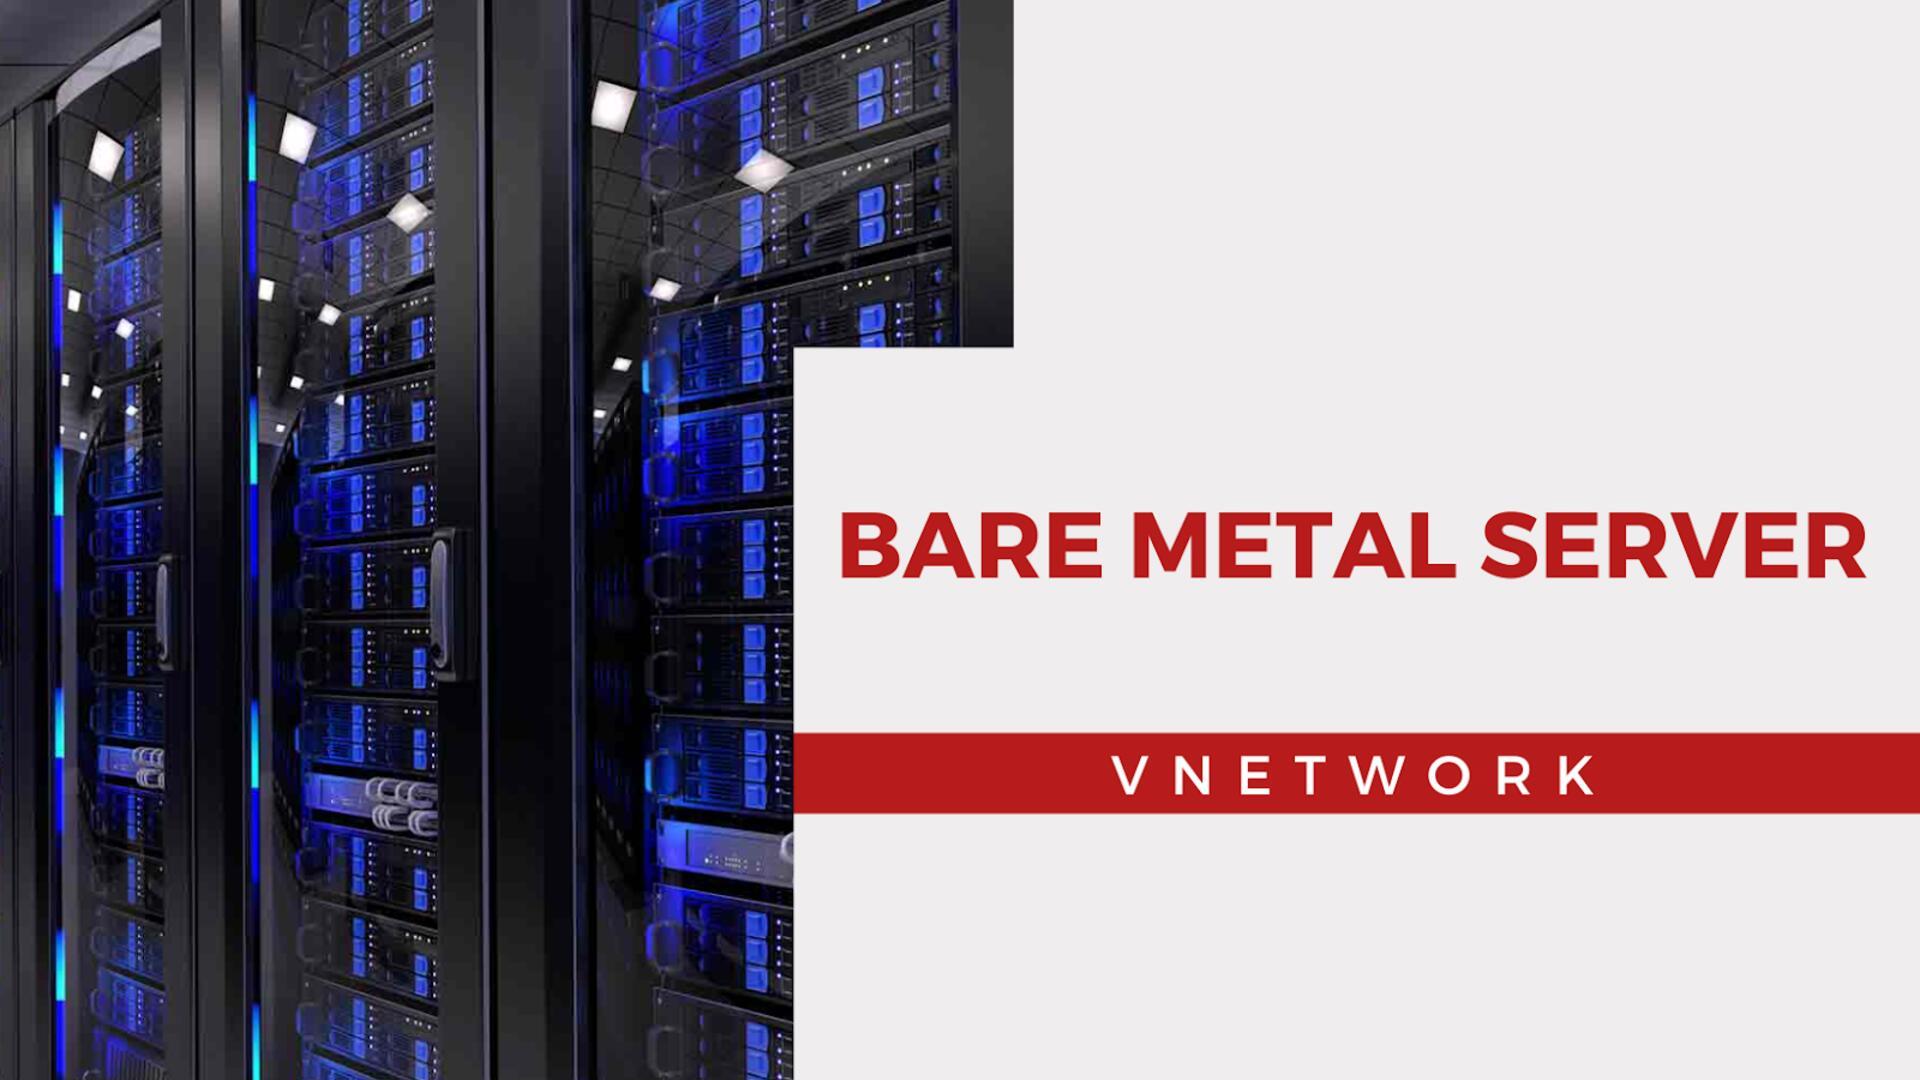 Bare Metal Server: A reliable hosting solution for businesses